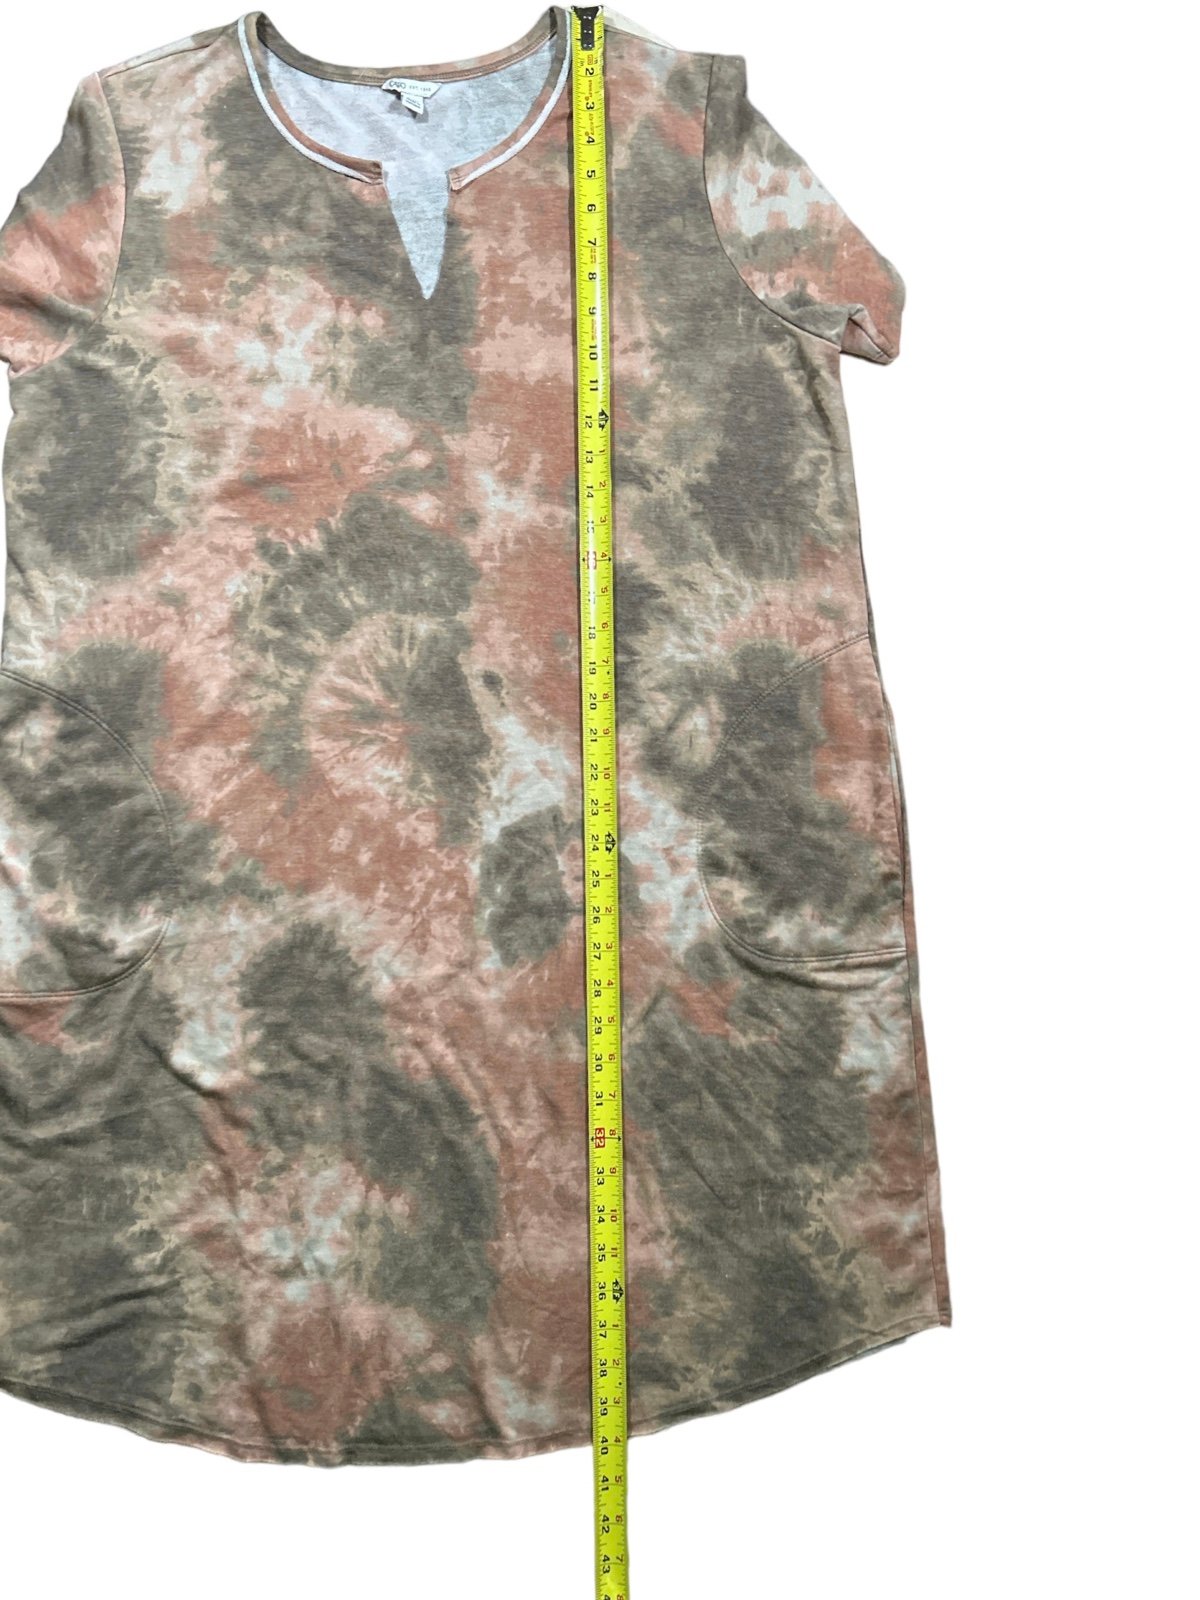 Cheap CATO Tie-Dye T-shirt Dress Size 18/20W OjK7zs905 outlet online shop